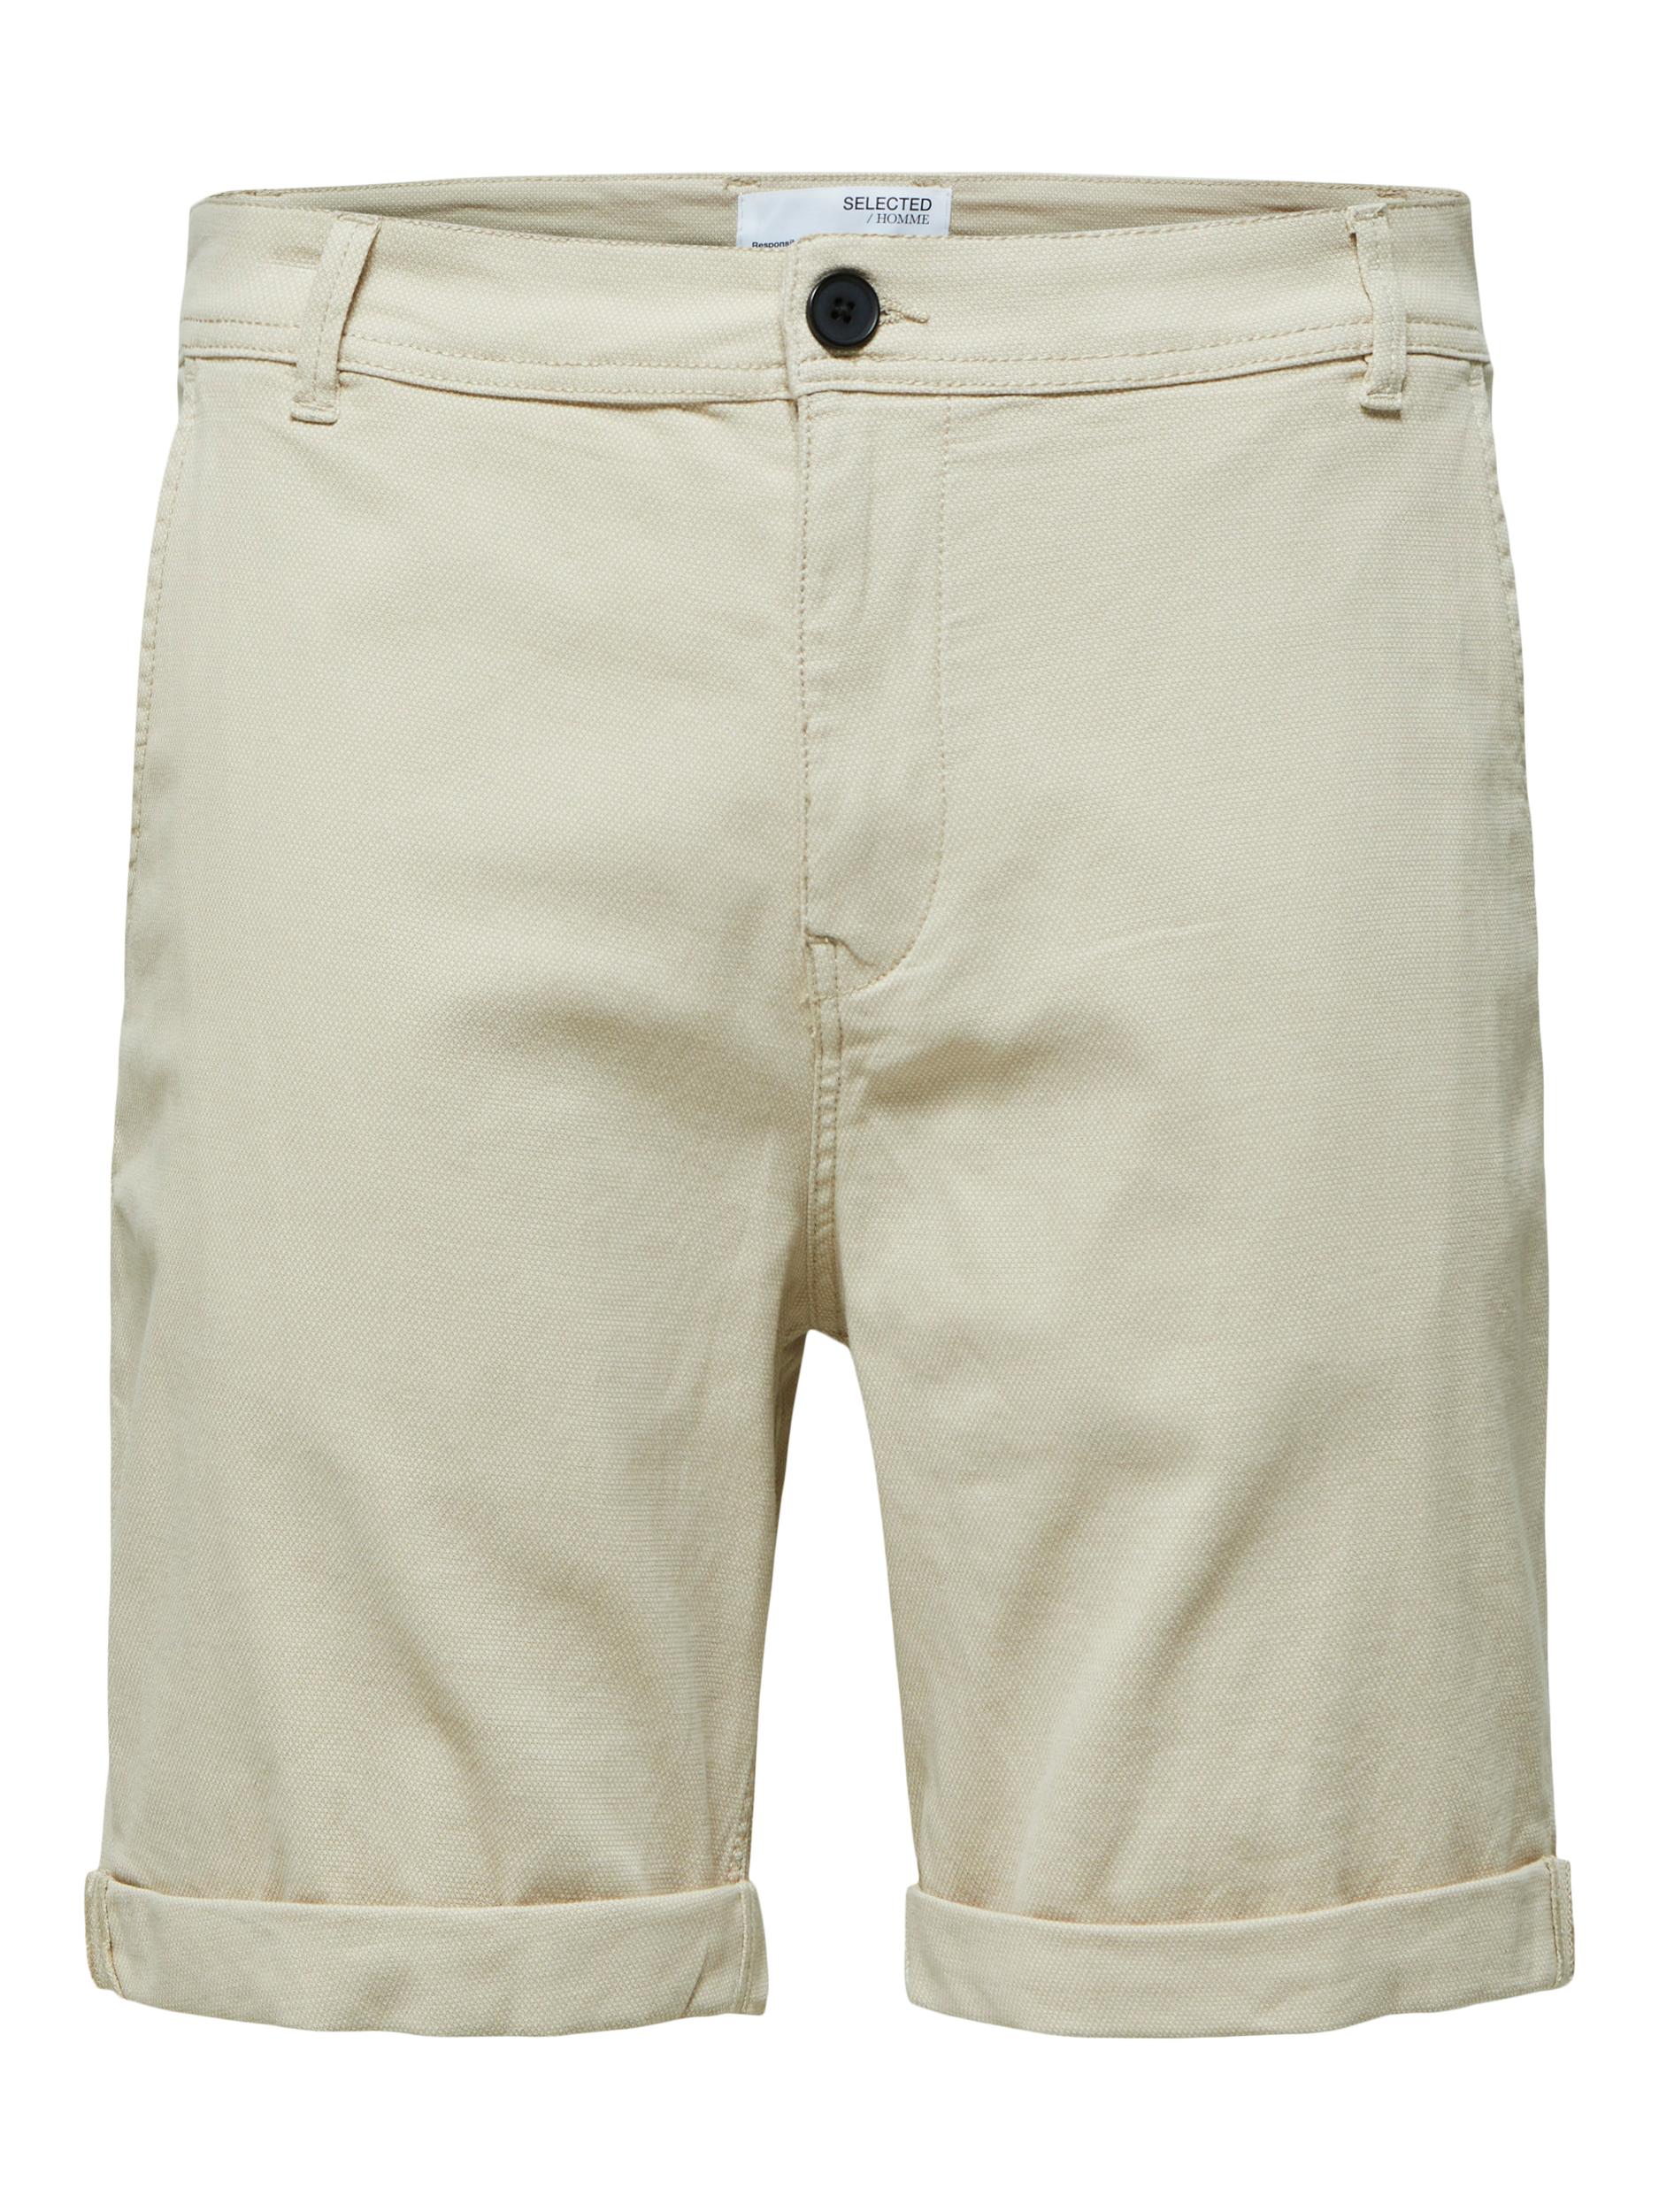  Comfort Luton Flex Shorts